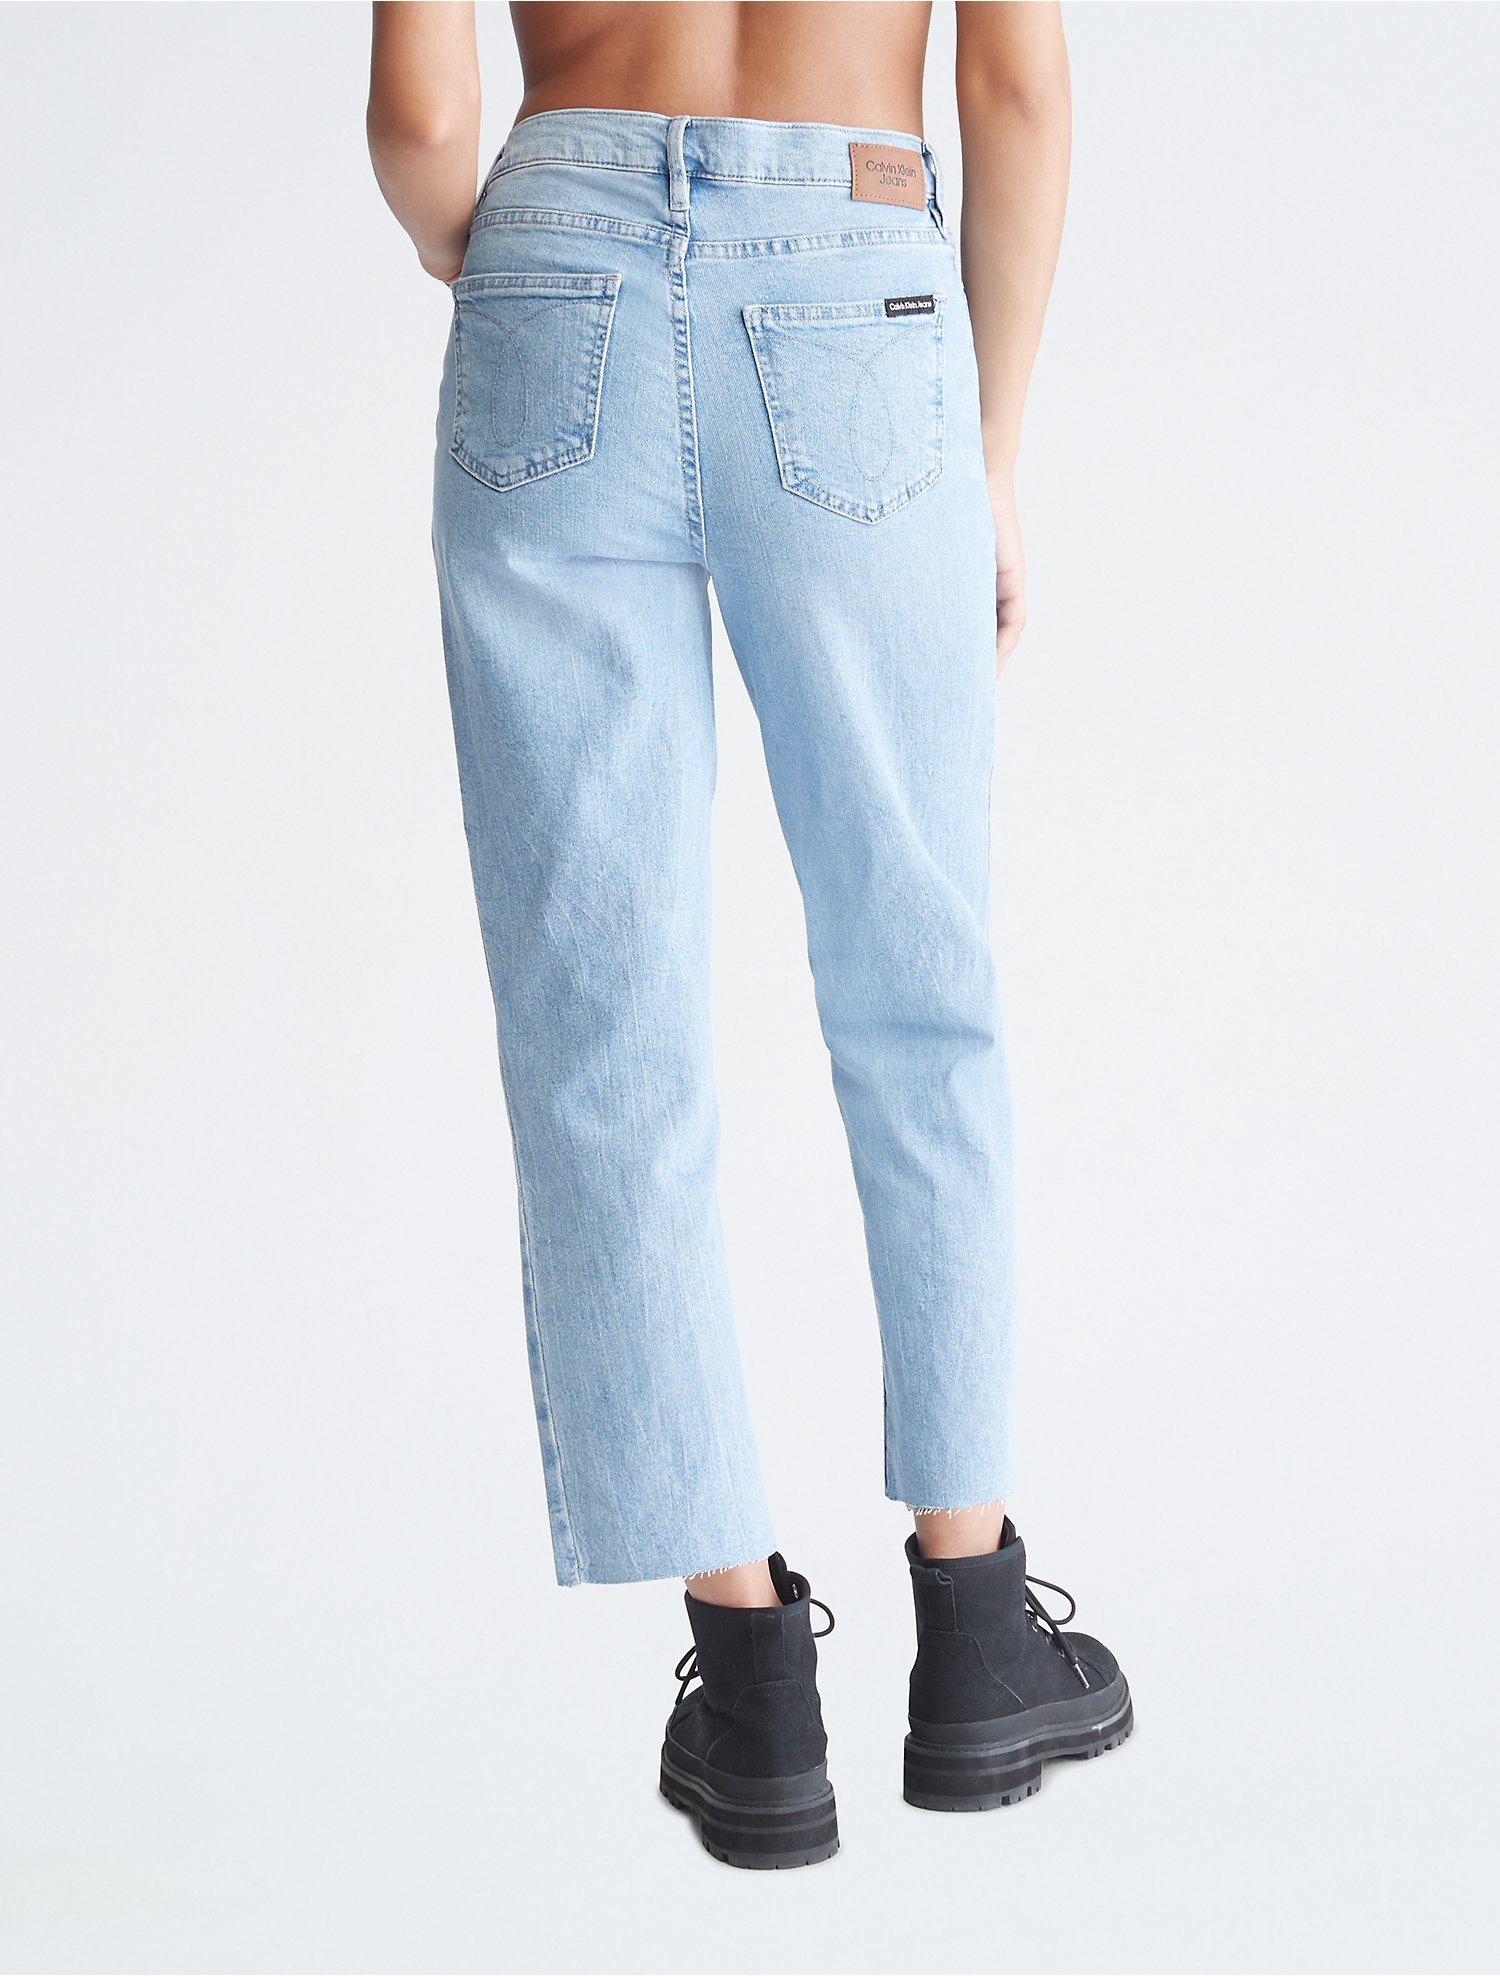 Buy Calvin Klein Jeans Men's jeans